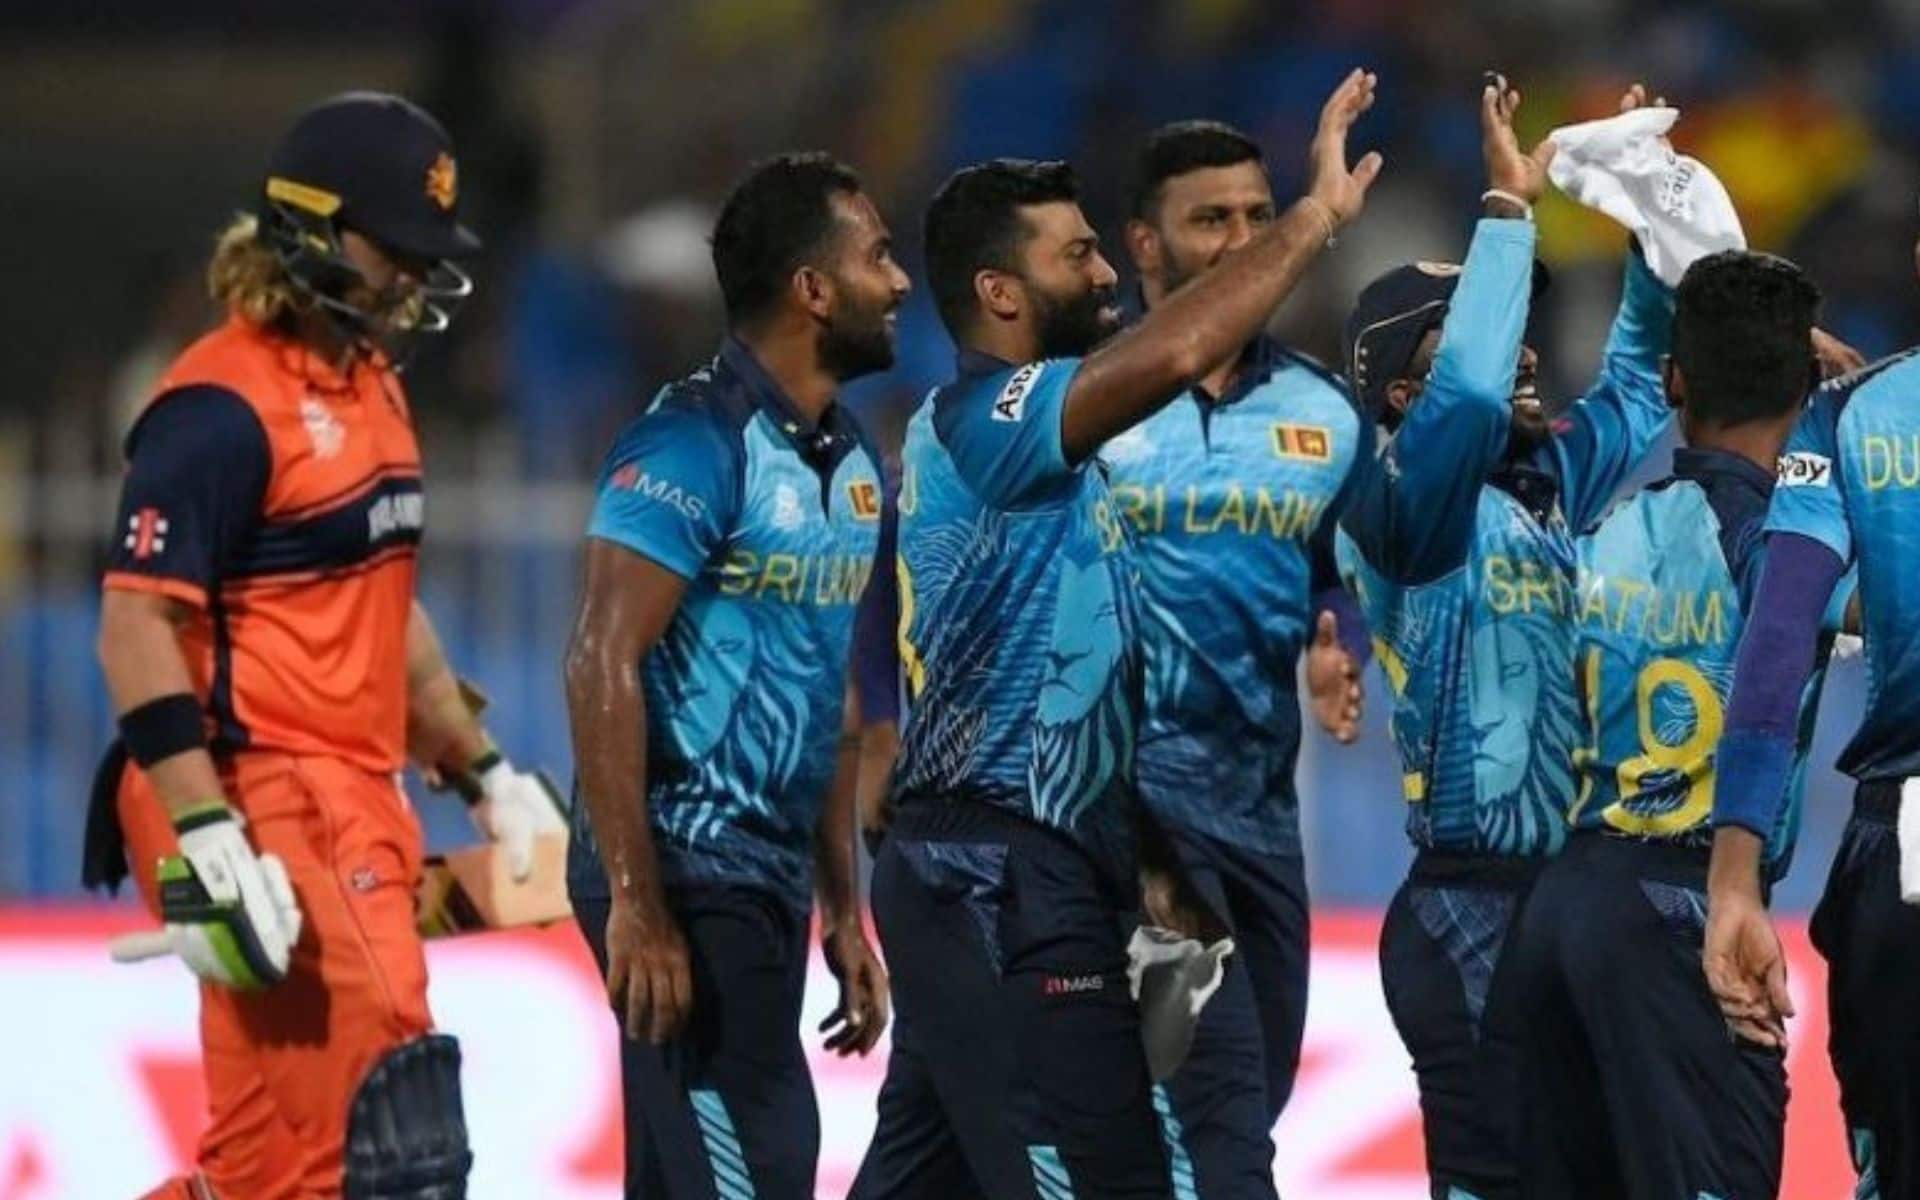 Sri Lanka beat New Zealand by 59 runs [X.com]